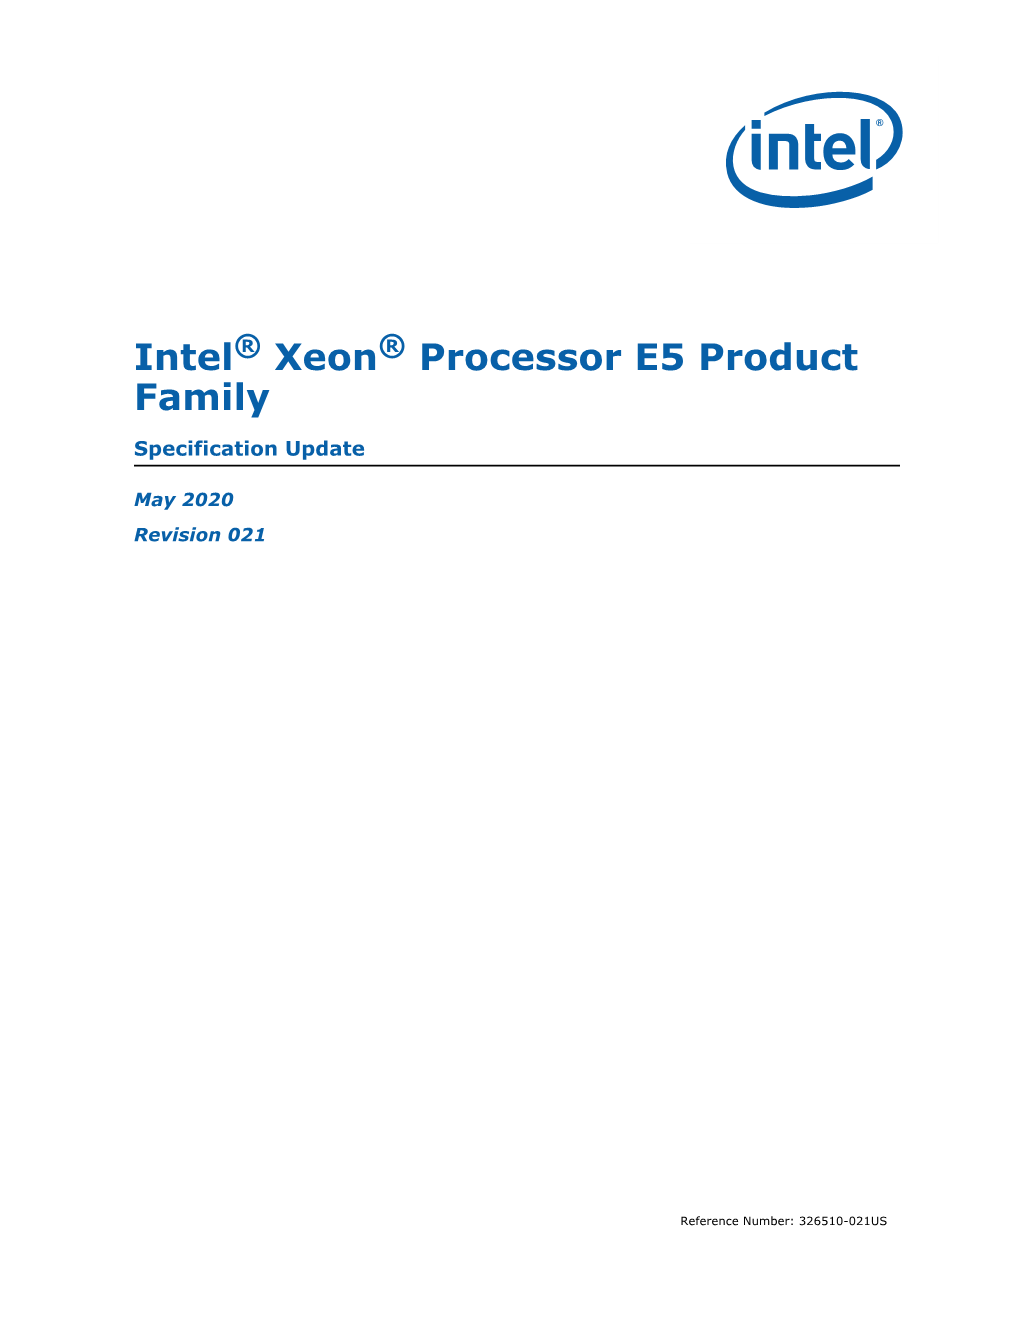 Intel® Xeon® Processor E5 Family Specification Update